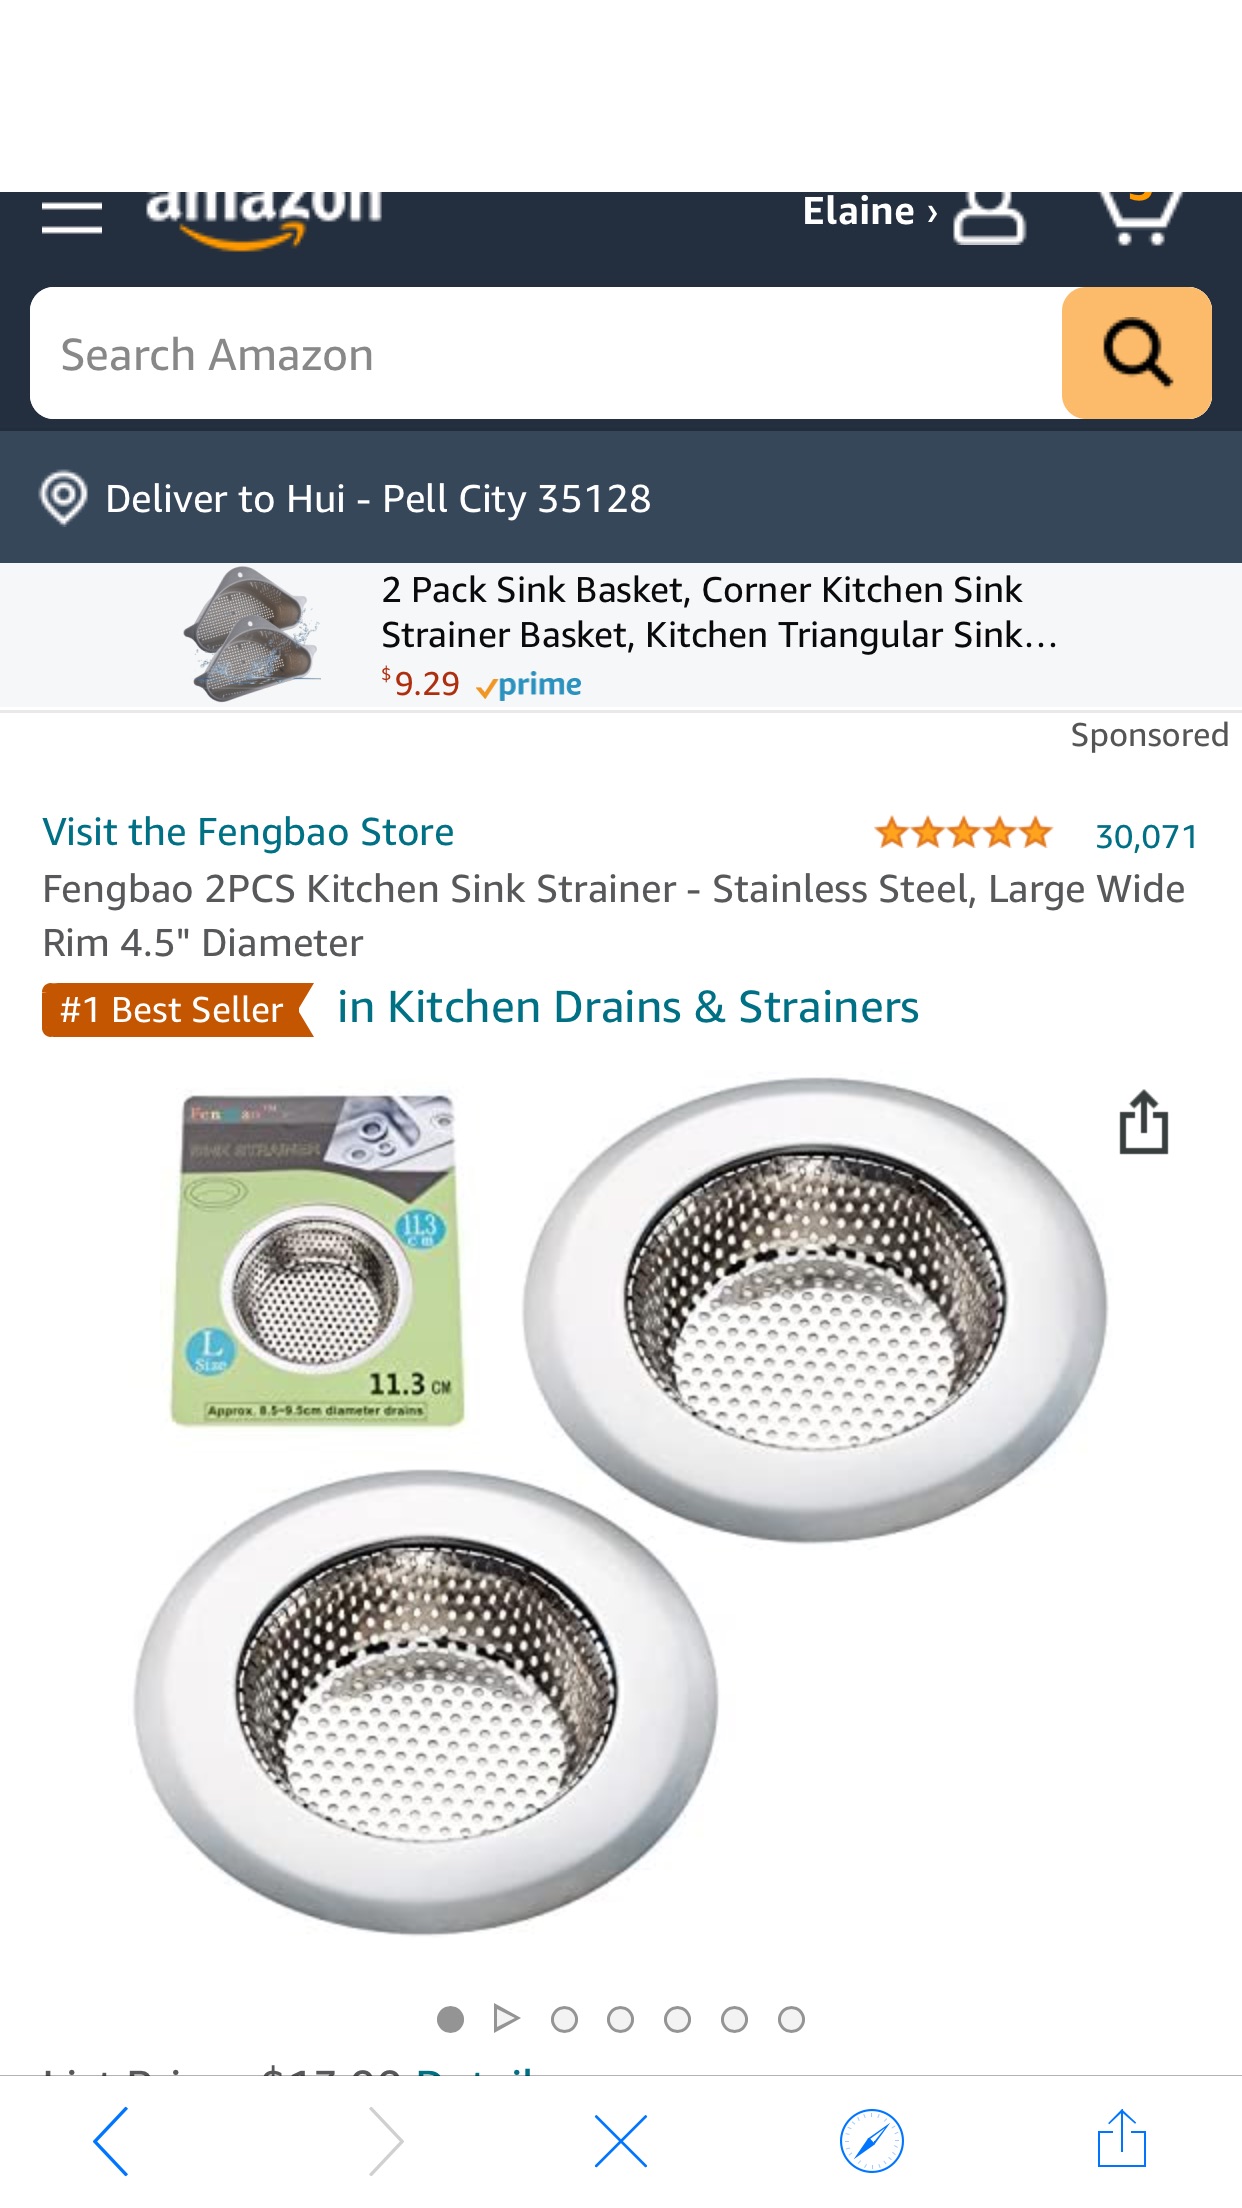 Fengbao 2PCS Kitchen Sink Strainer - Stainless Steel, Large Wide Rim 4.5" Diameter - - Amazon.com水槽过滤网